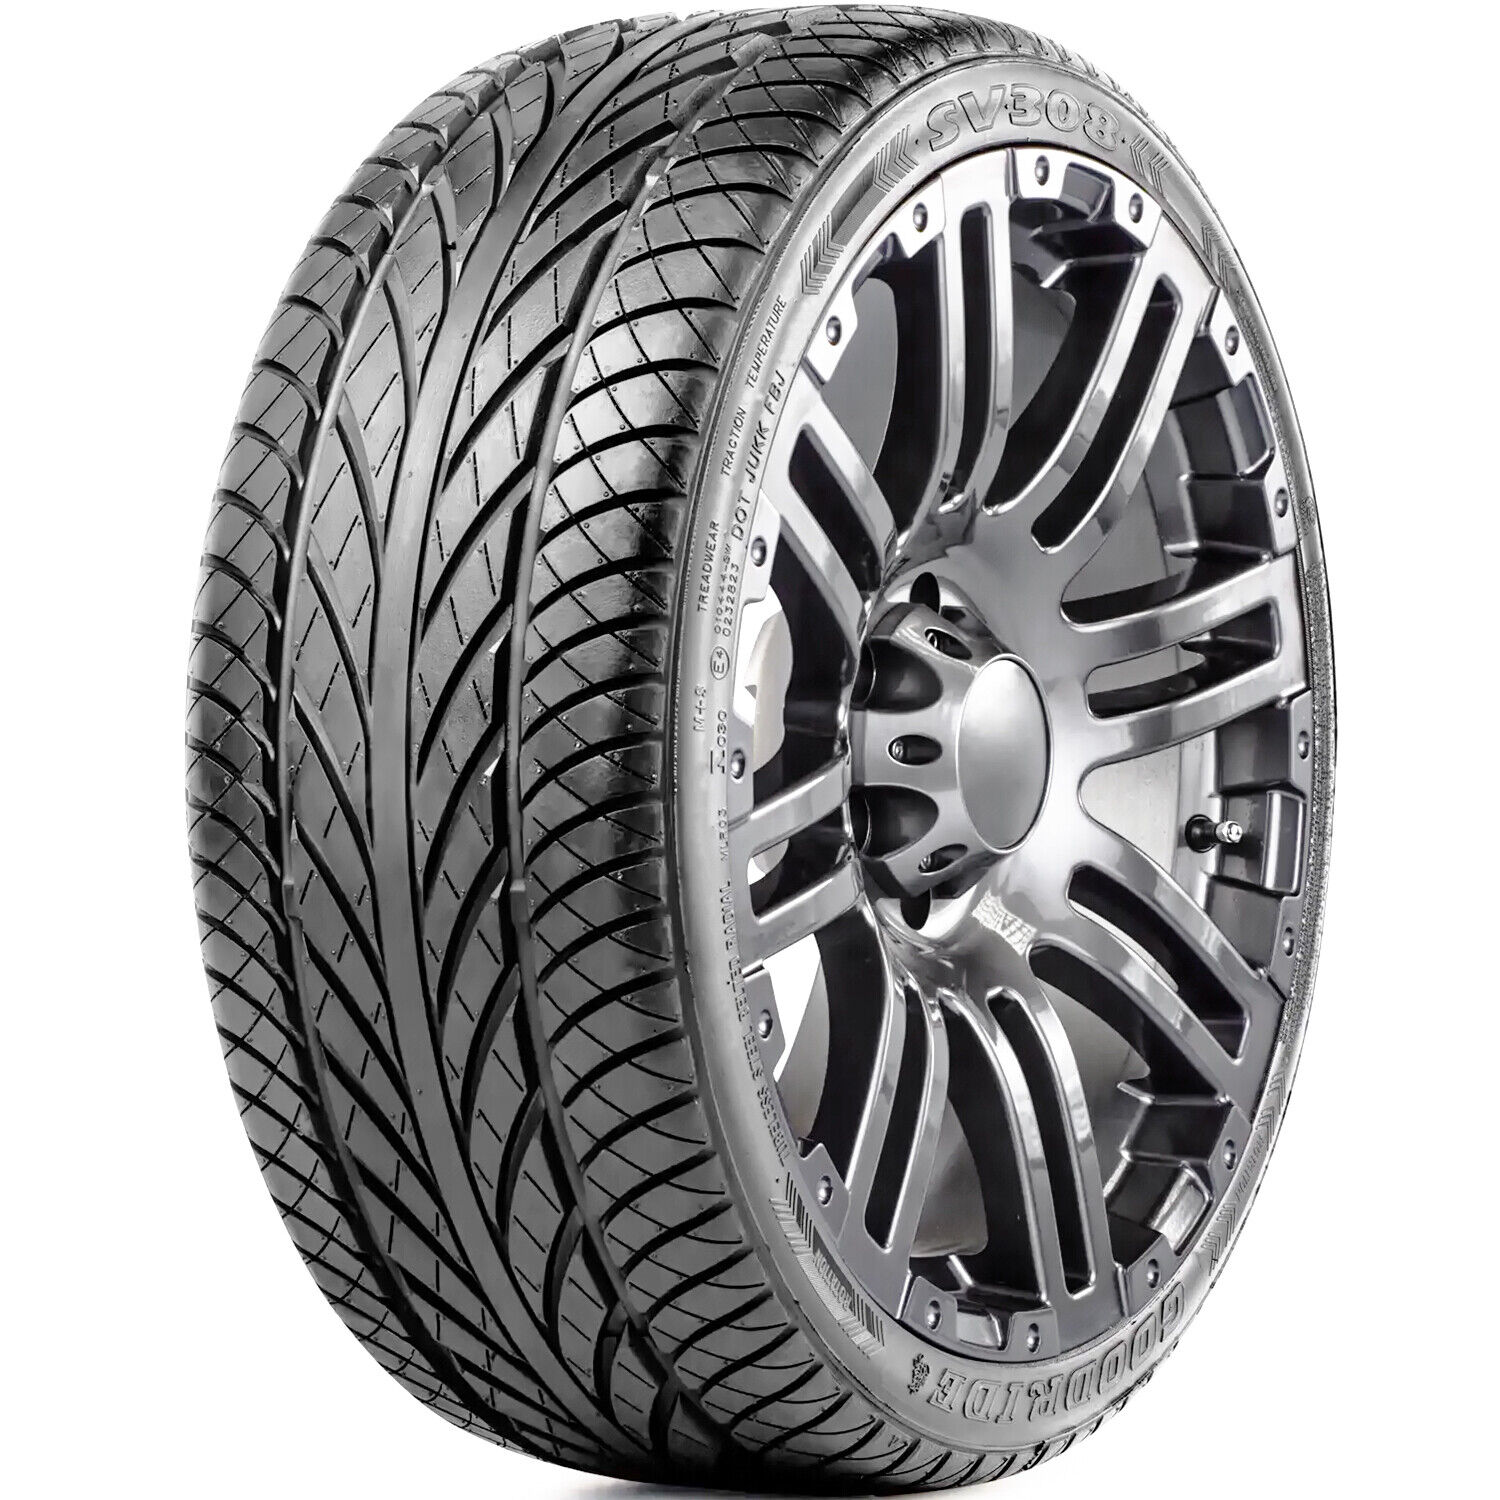 2 Tires Goodride SV308 285/50R20 112H A/S Performance